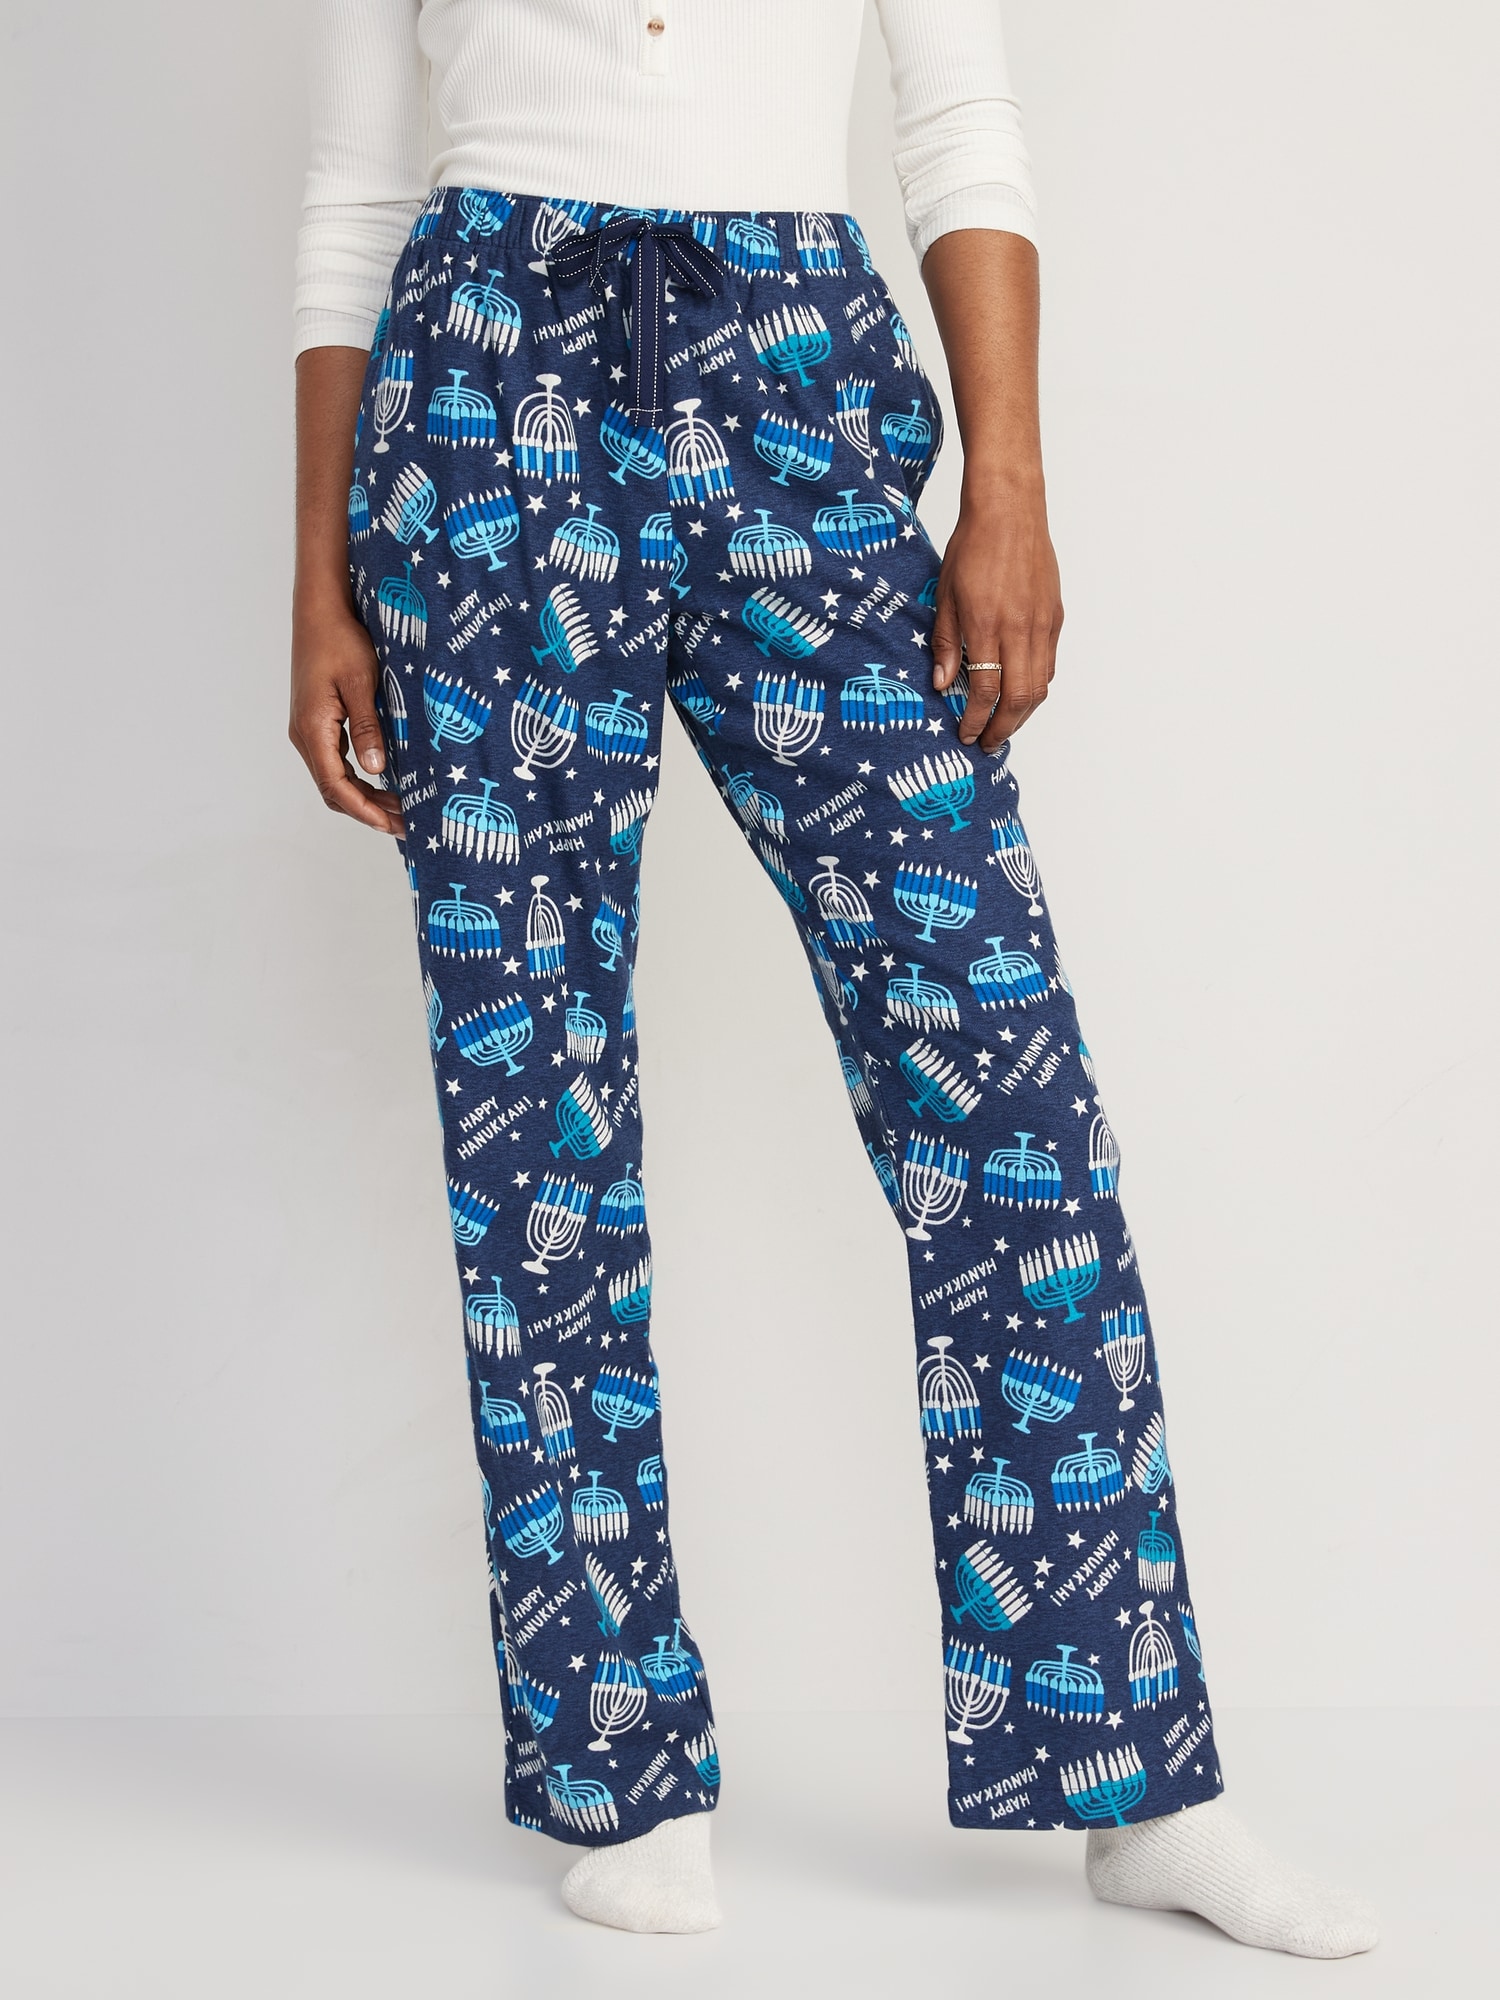 Oldnavy Printed Flannel Pajama Pants for Women